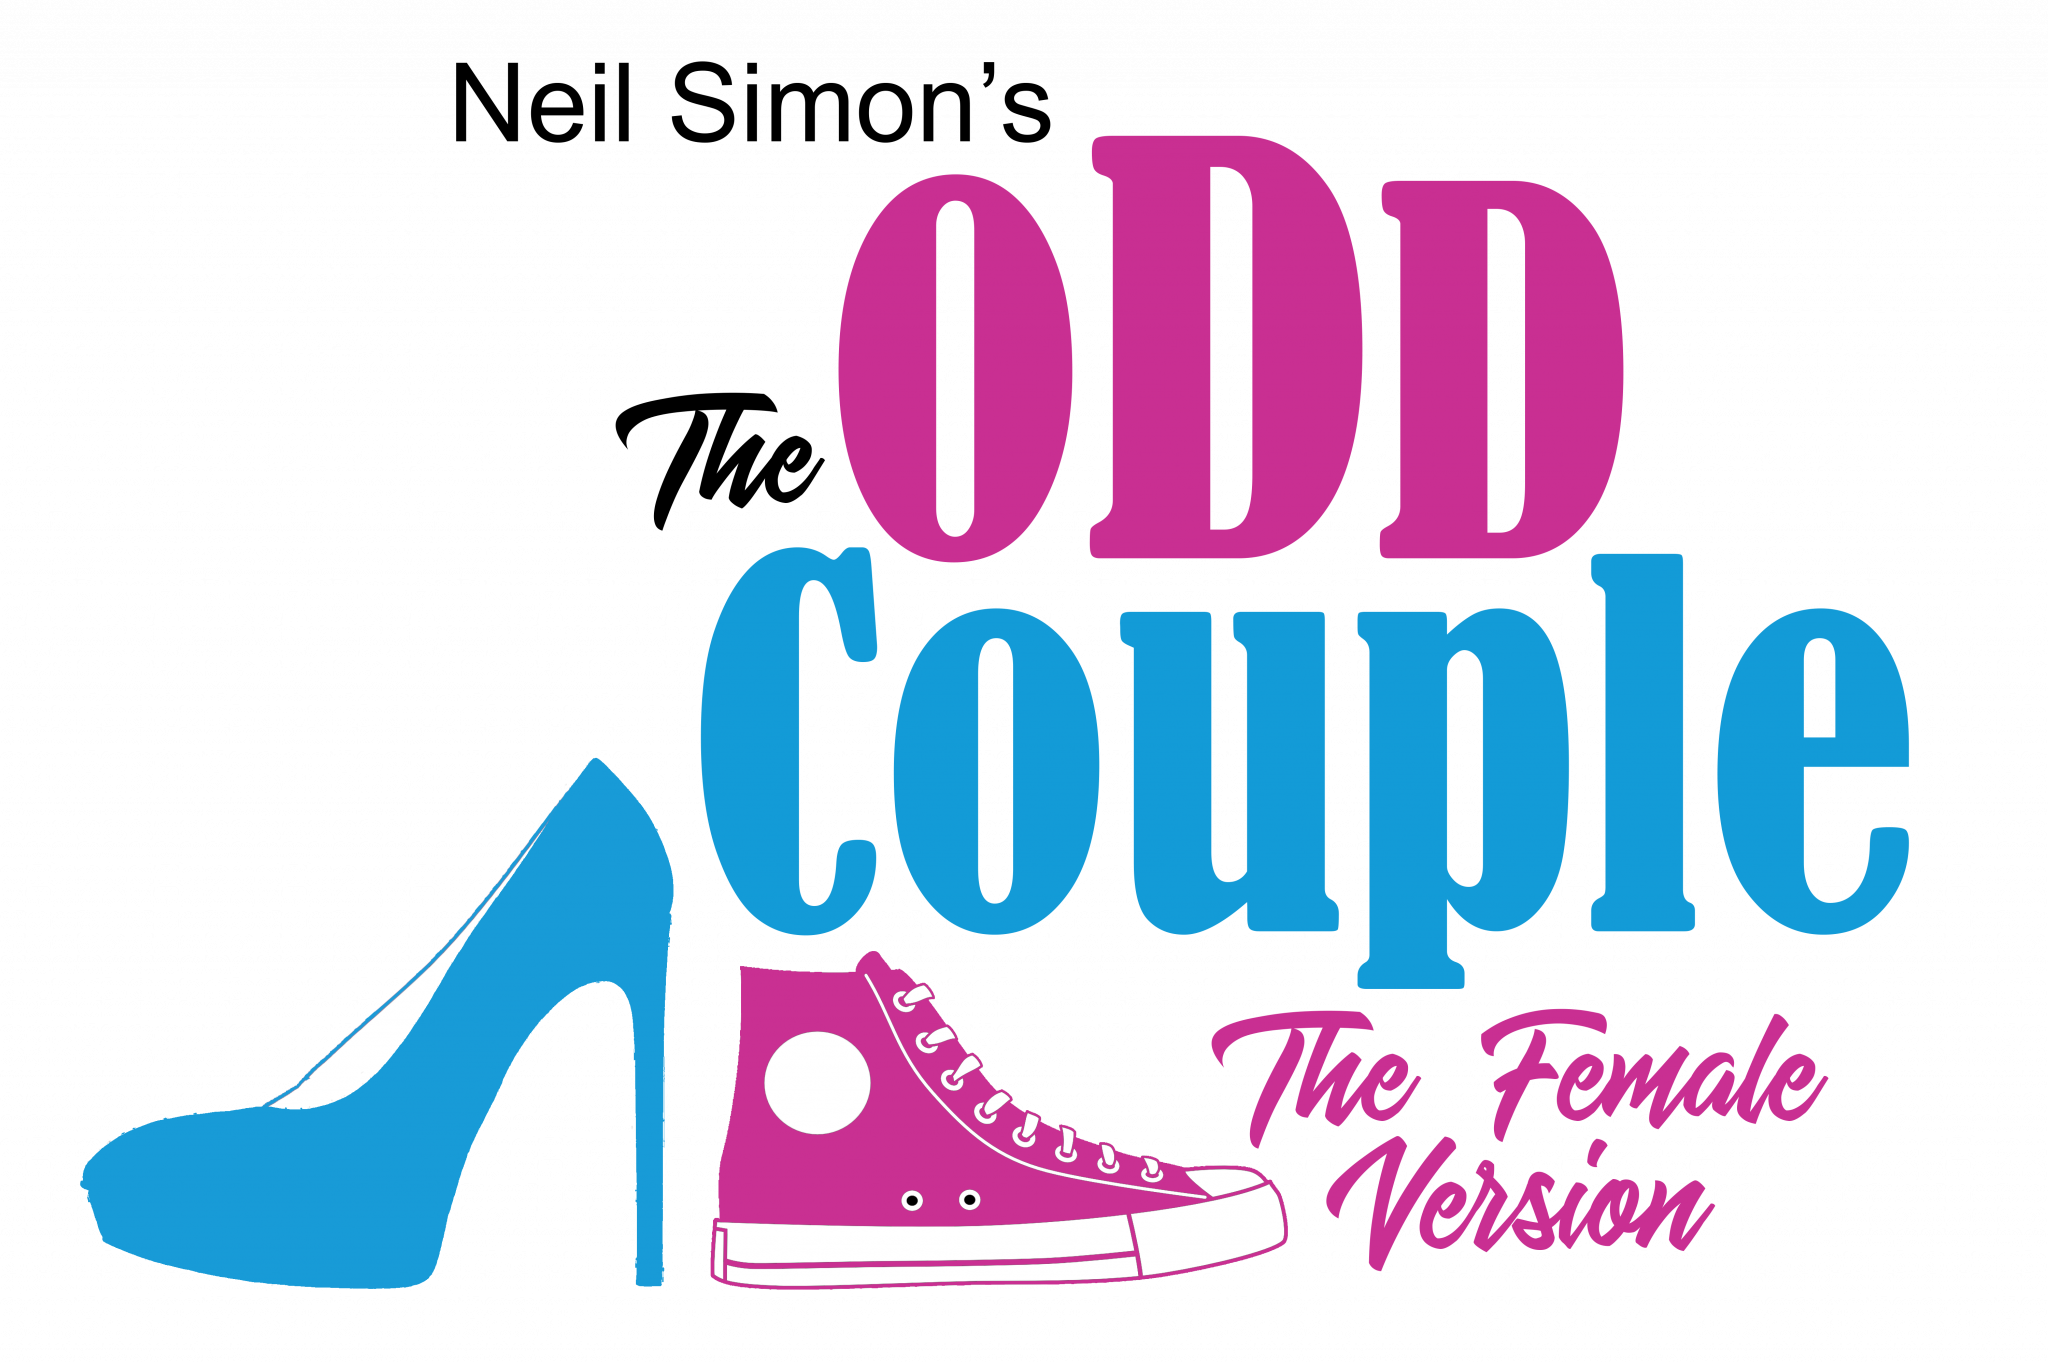 The Odd Couple Female Version logo